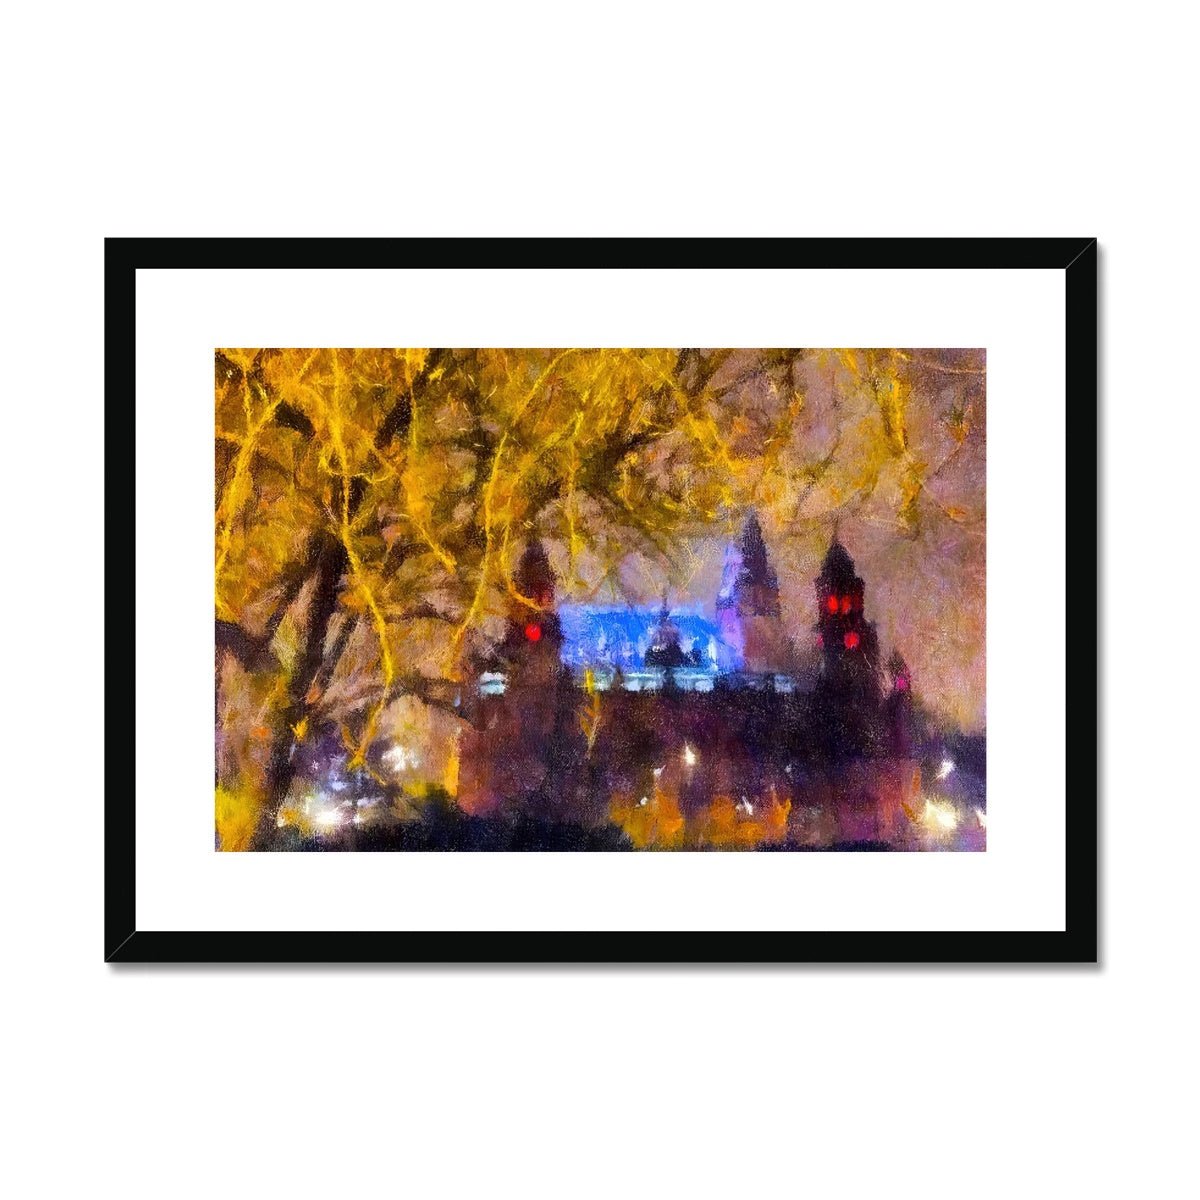 Kelvingrove Nights Painting | Framed & Mounted Prints From Scotland-Framed & Mounted Prints-Edinburgh & Glasgow Art Gallery-A2 Landscape-Black Frame-Paintings, Prints, Homeware, Art Gifts From Scotland By Scottish Artist Kevin Hunter